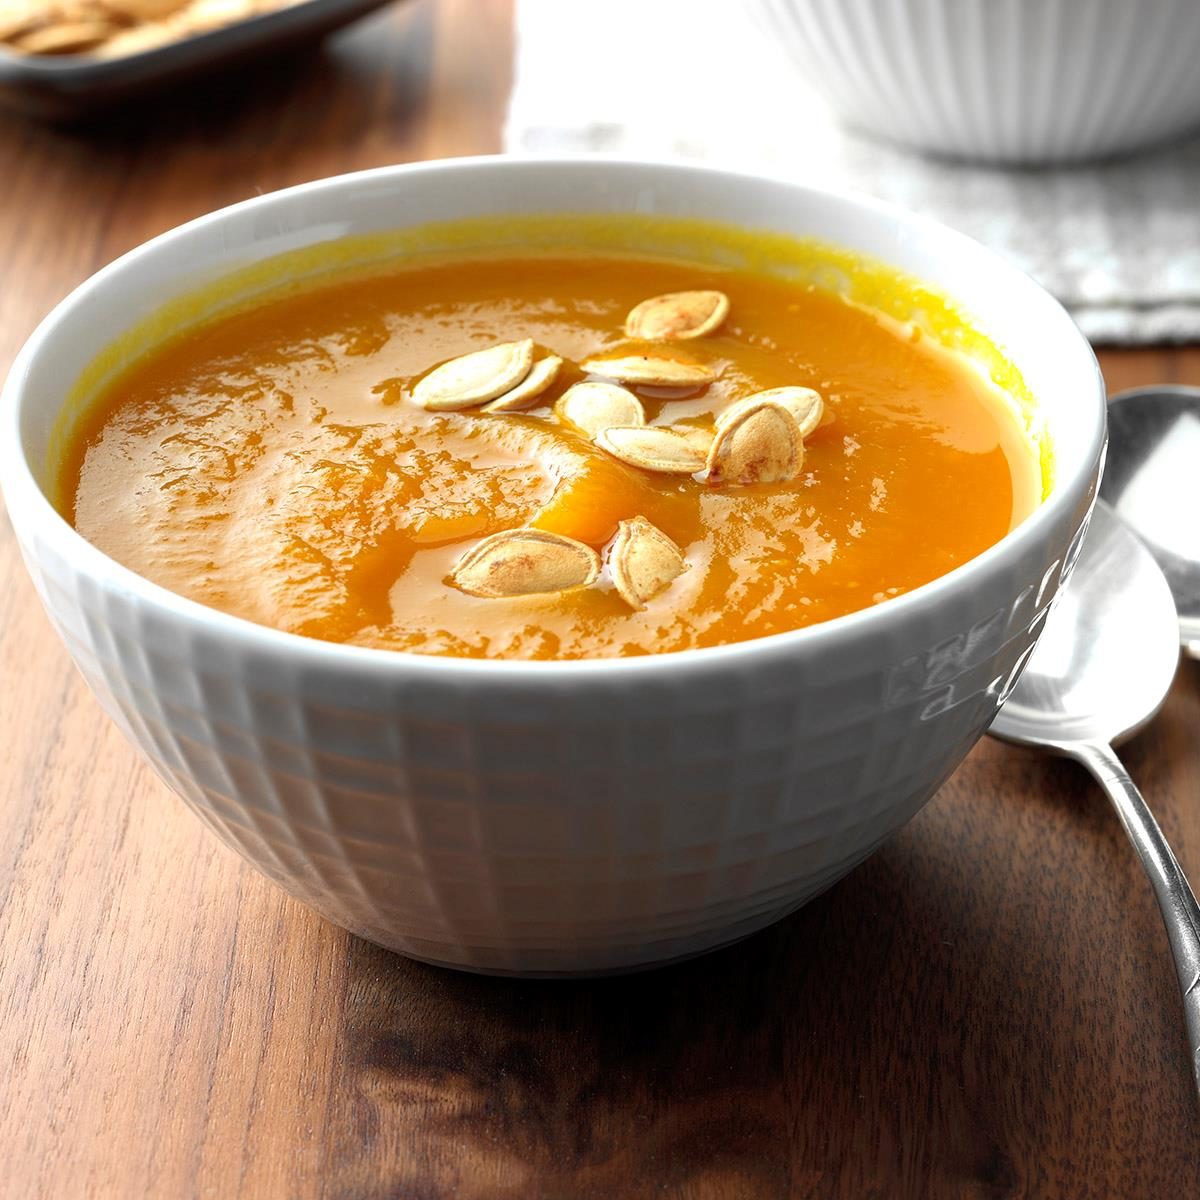 Fresh Pumpkin Soup Recipe: How to Make It